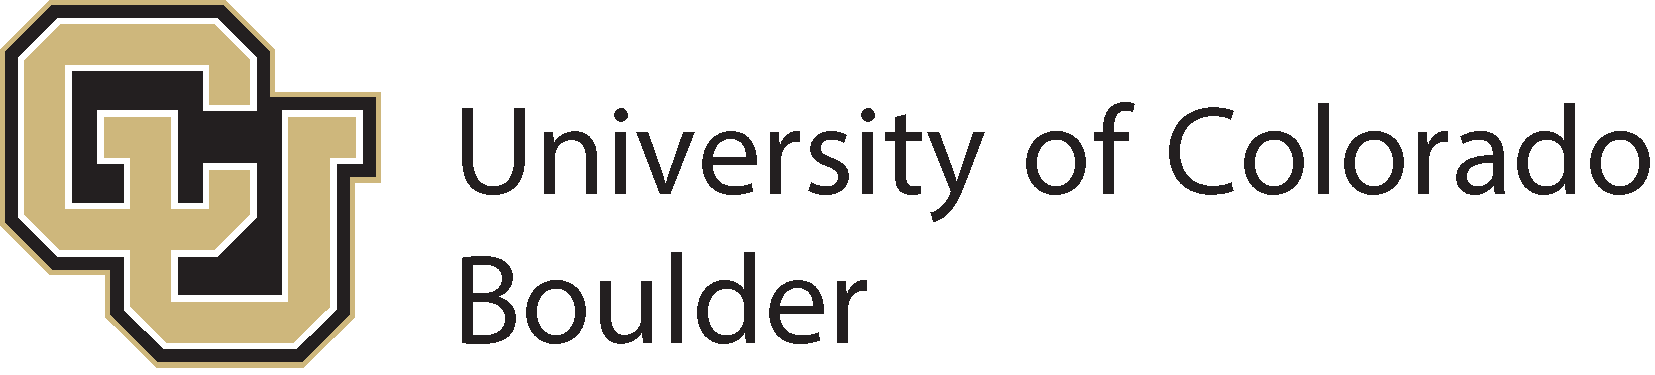 University of Colorado Boulder-logo (CU Boulder) - SVG, PNG, AI, EPS ...